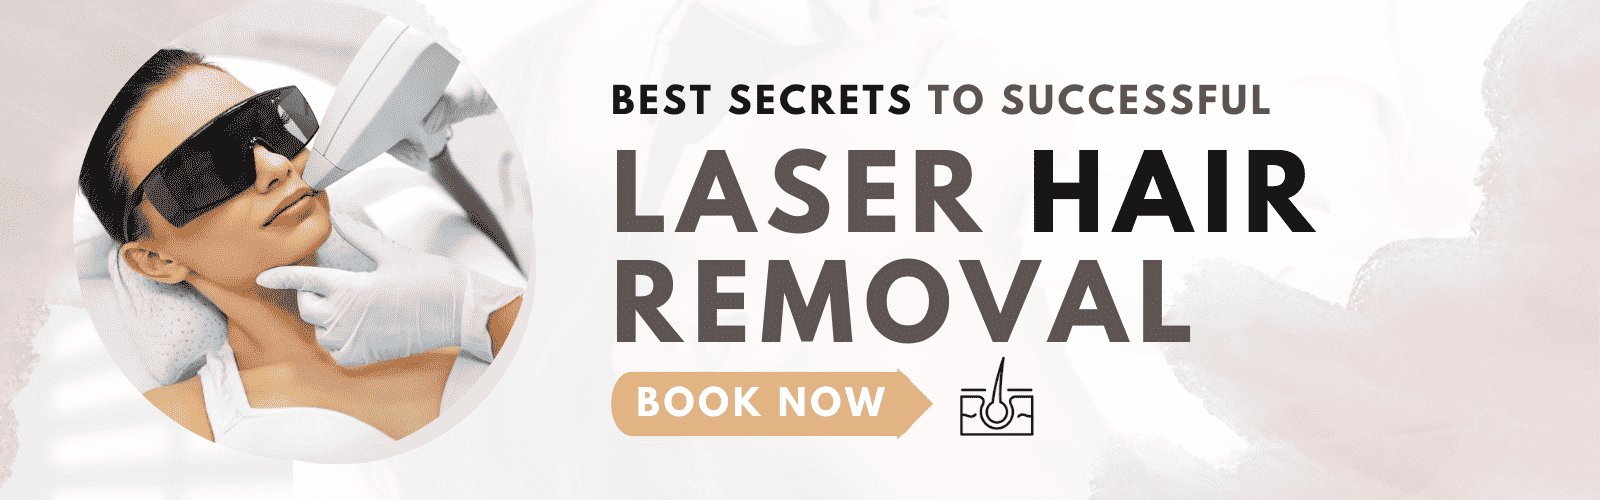 Banner_1_Laser_hair_removal